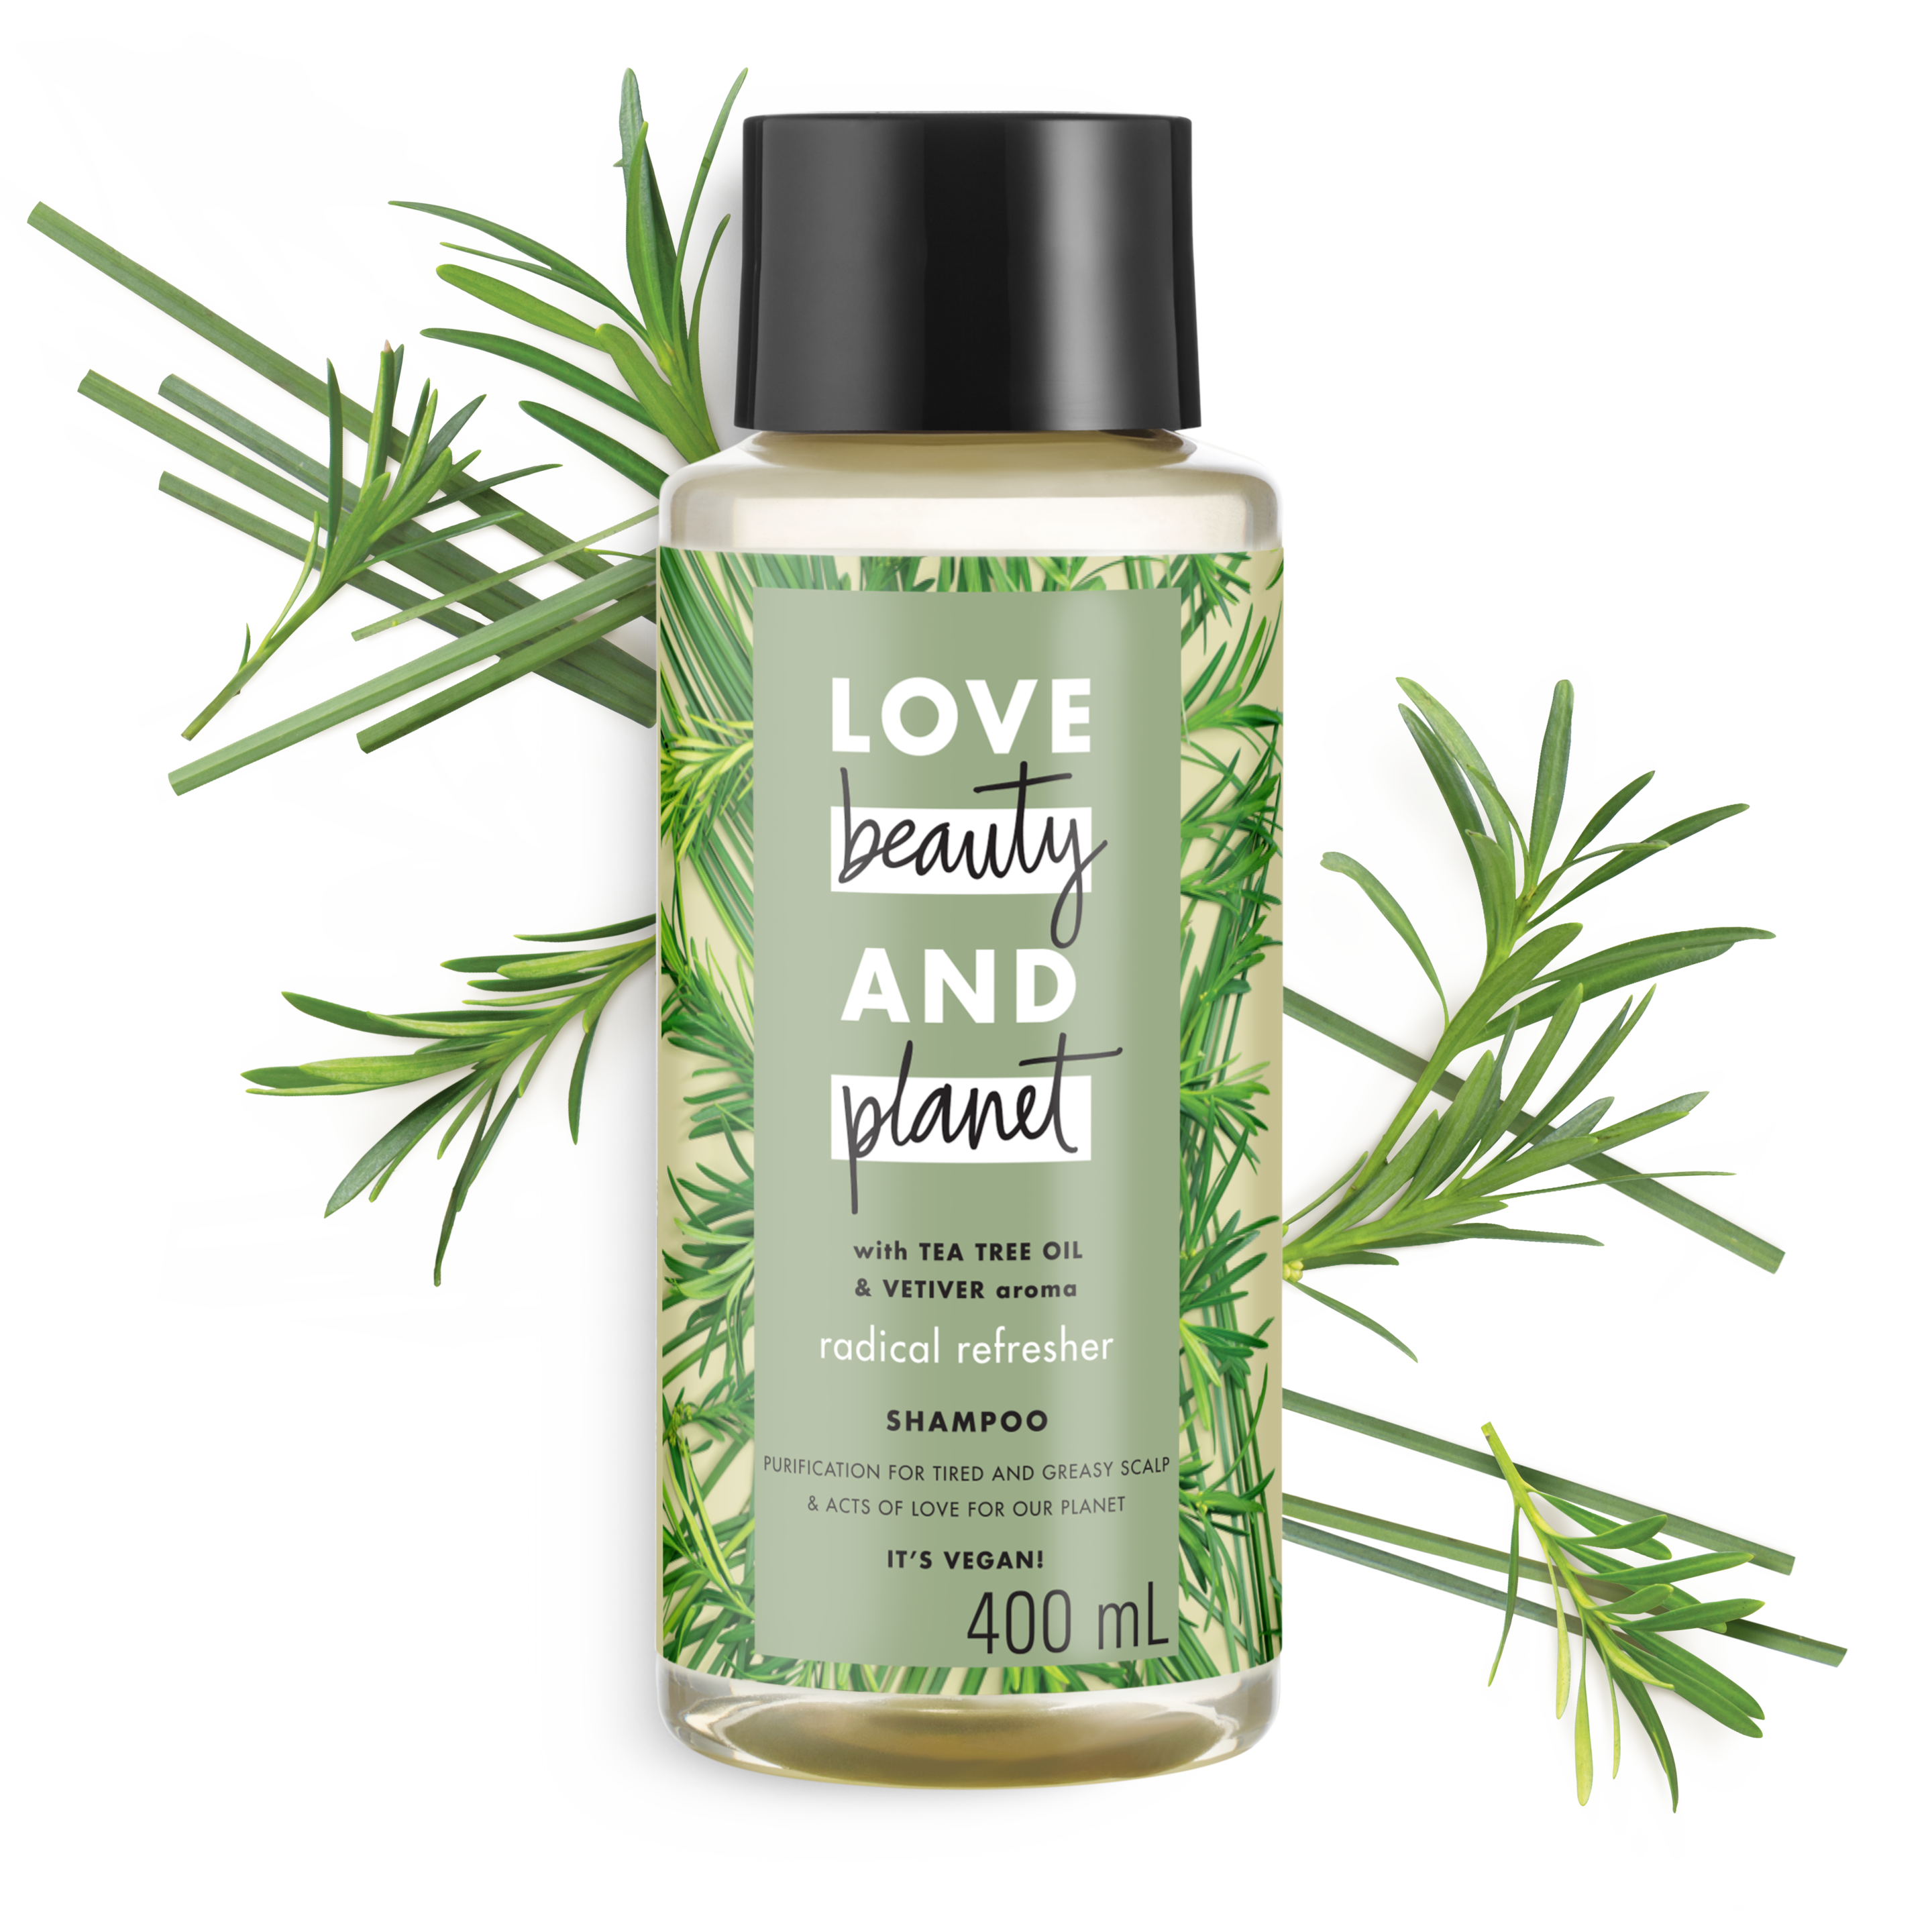 Tampak depan kemasan Love Beauty and Planet Tea Tree Oil & Vetiver Shampoo ukuran 400 ml